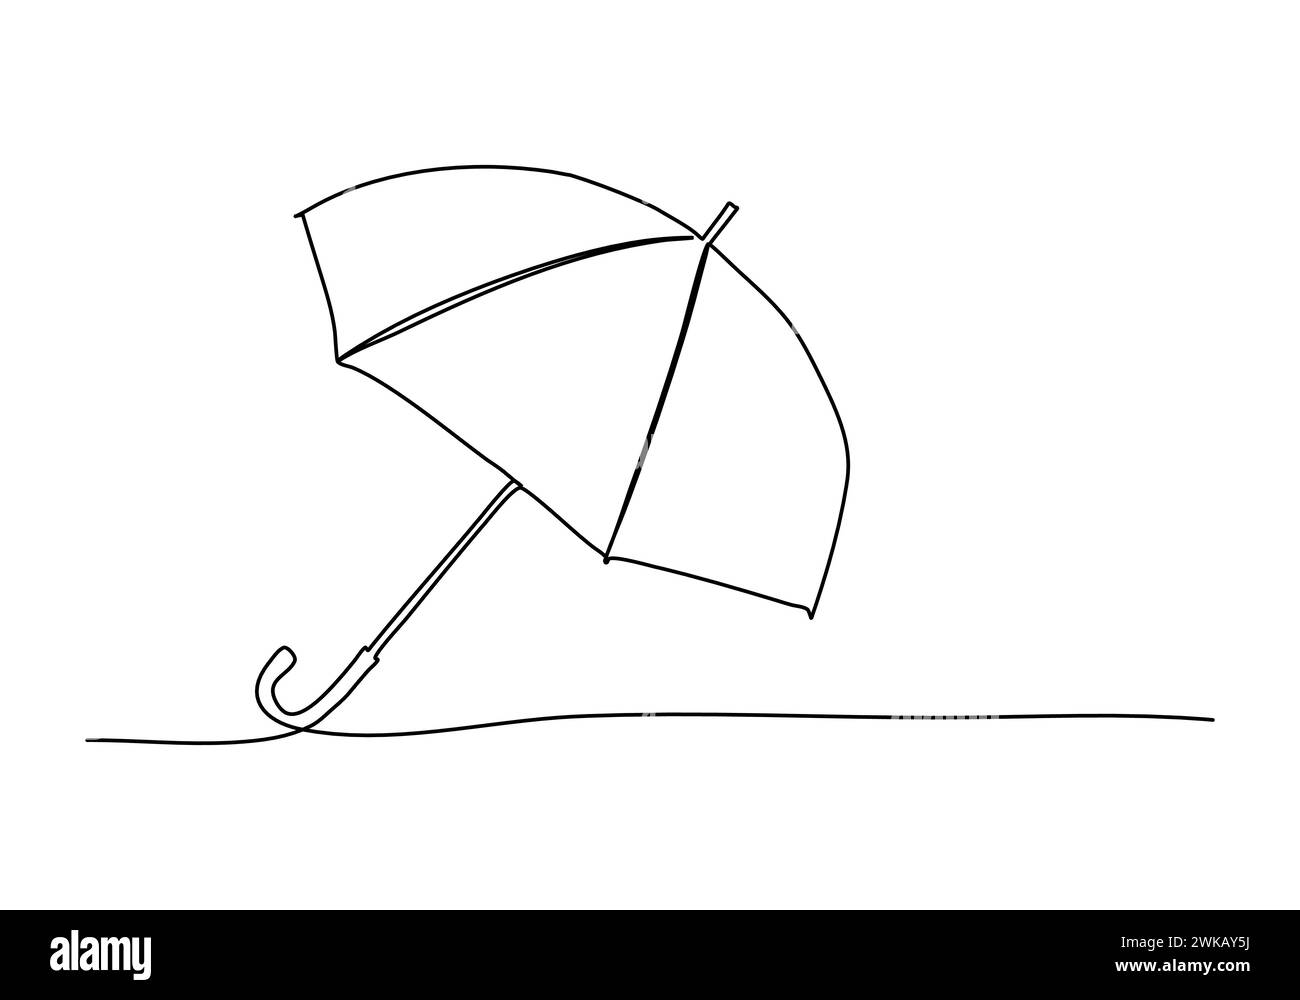 Umbrella one line drawing vector illustration. Stock Vector